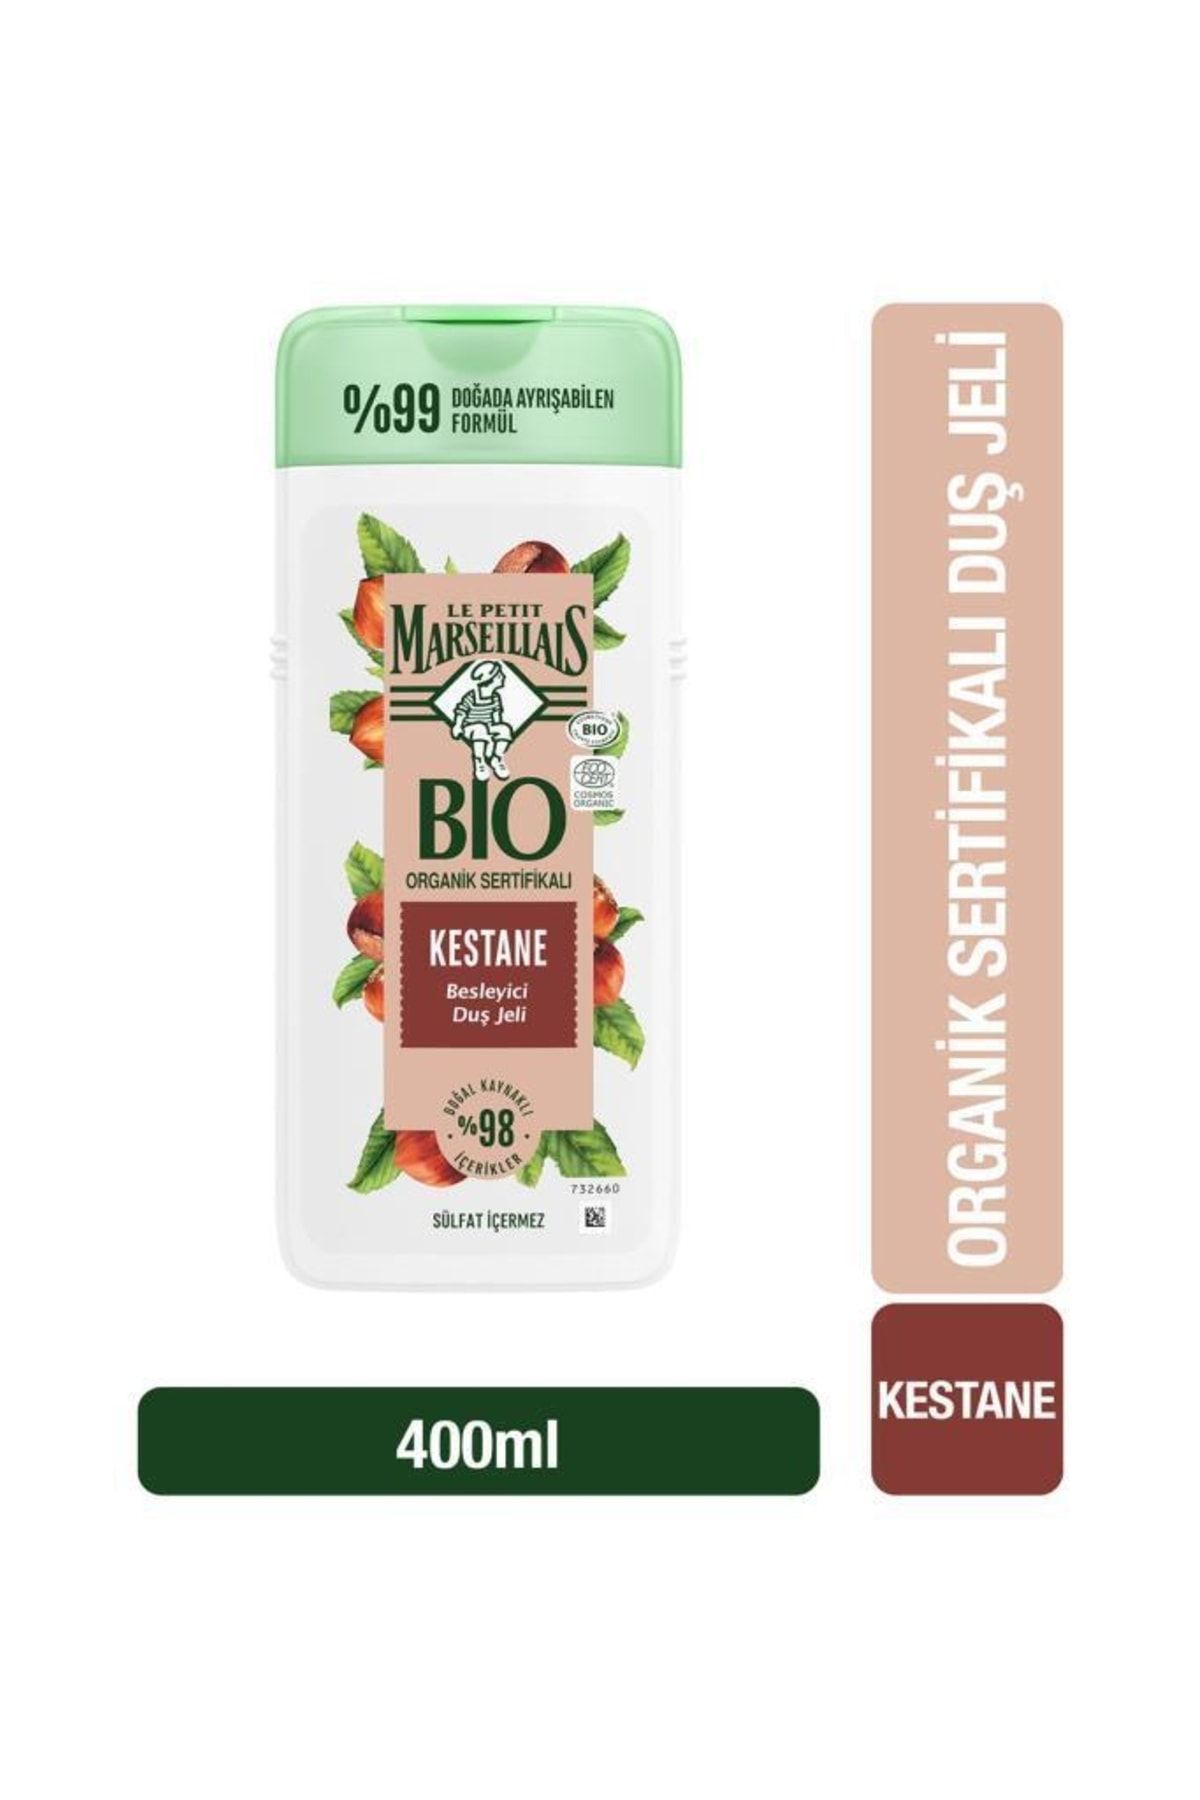 Le Petit Marseillais Marka: Bio Organik Sertifikalı Kestane Duş Jeli 400 Ml Kategori: Duş Jeli